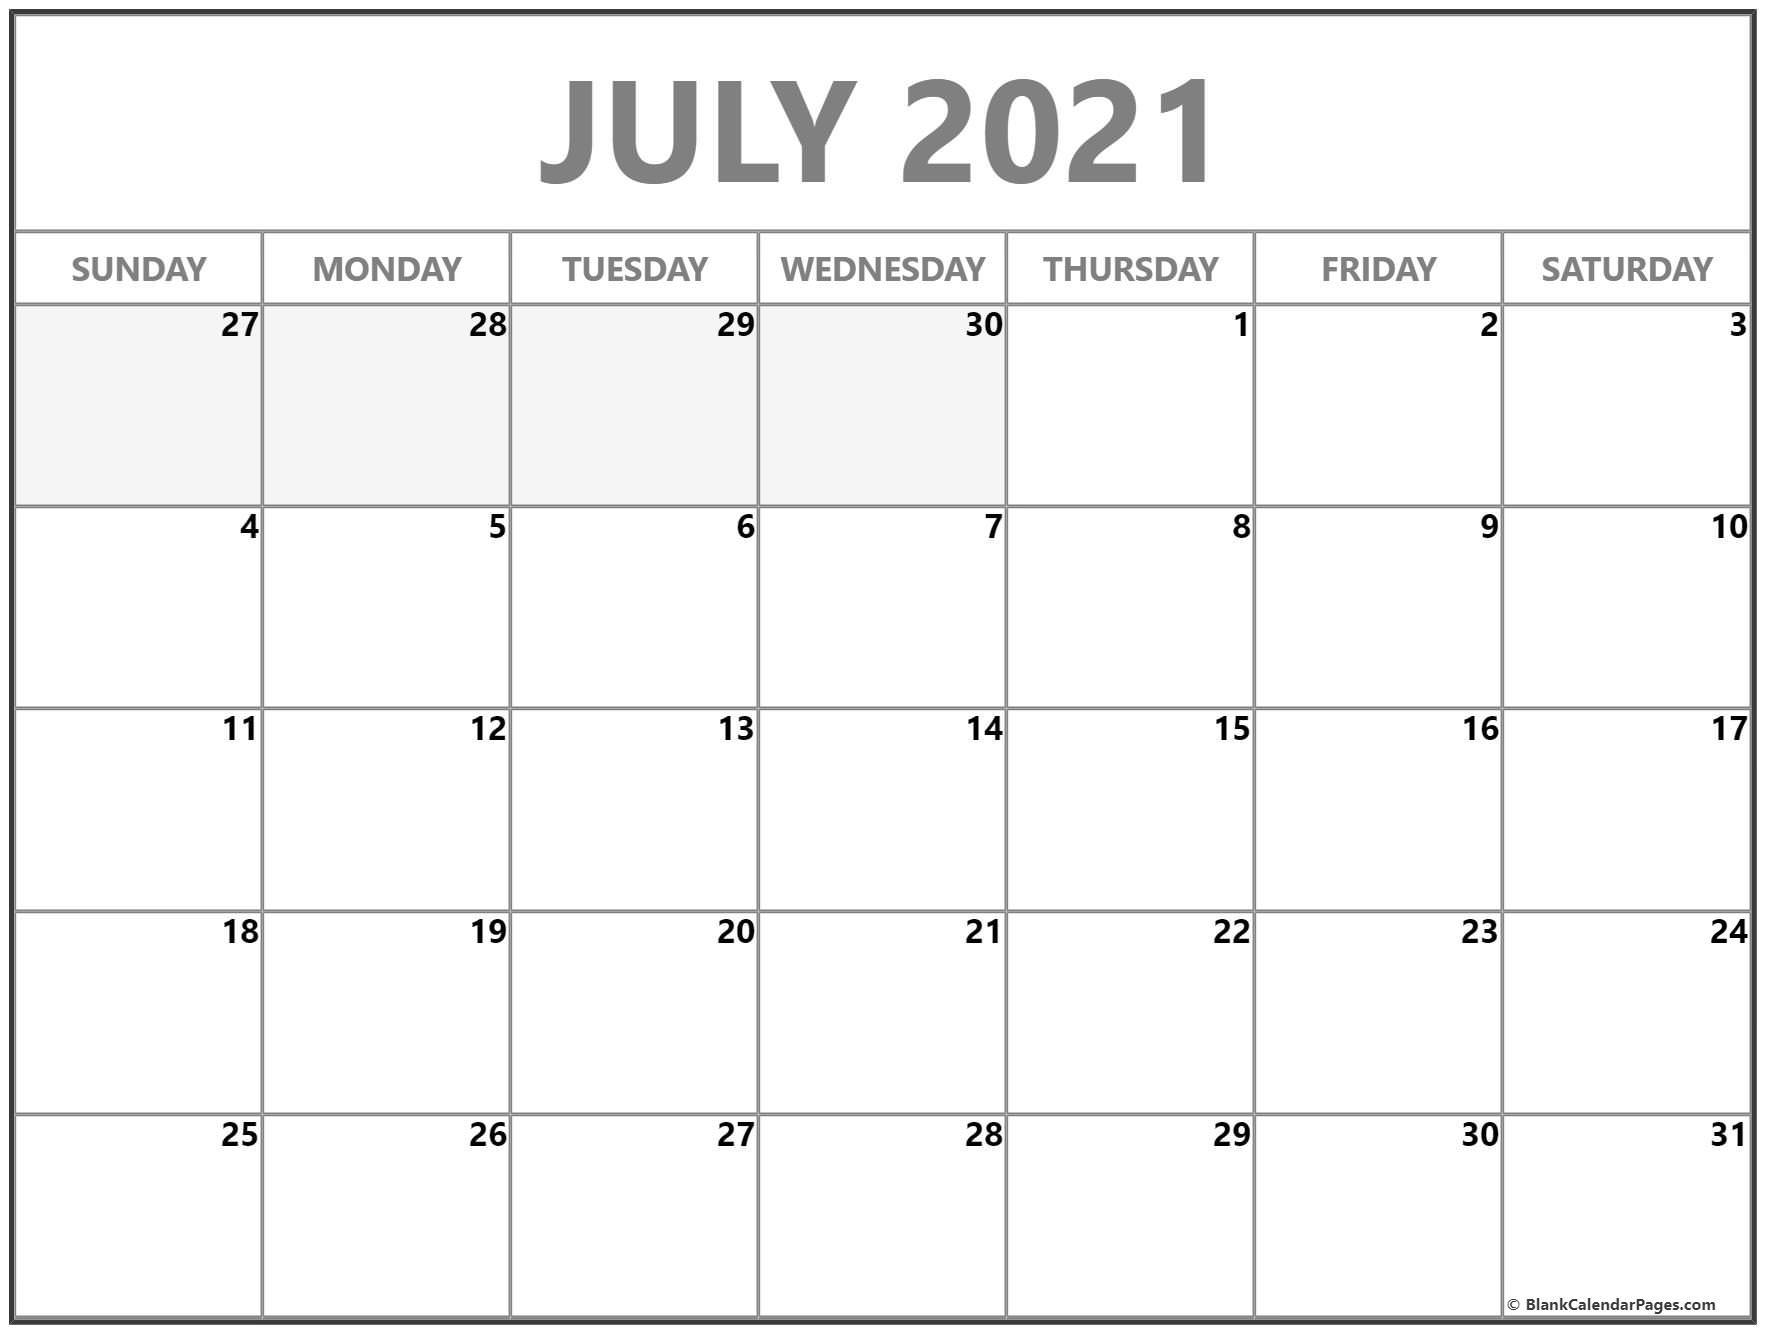 July 2021 Calendar | Free Printable Calendar Templates-Free Printable Calendars 2021 Monthly With Bills